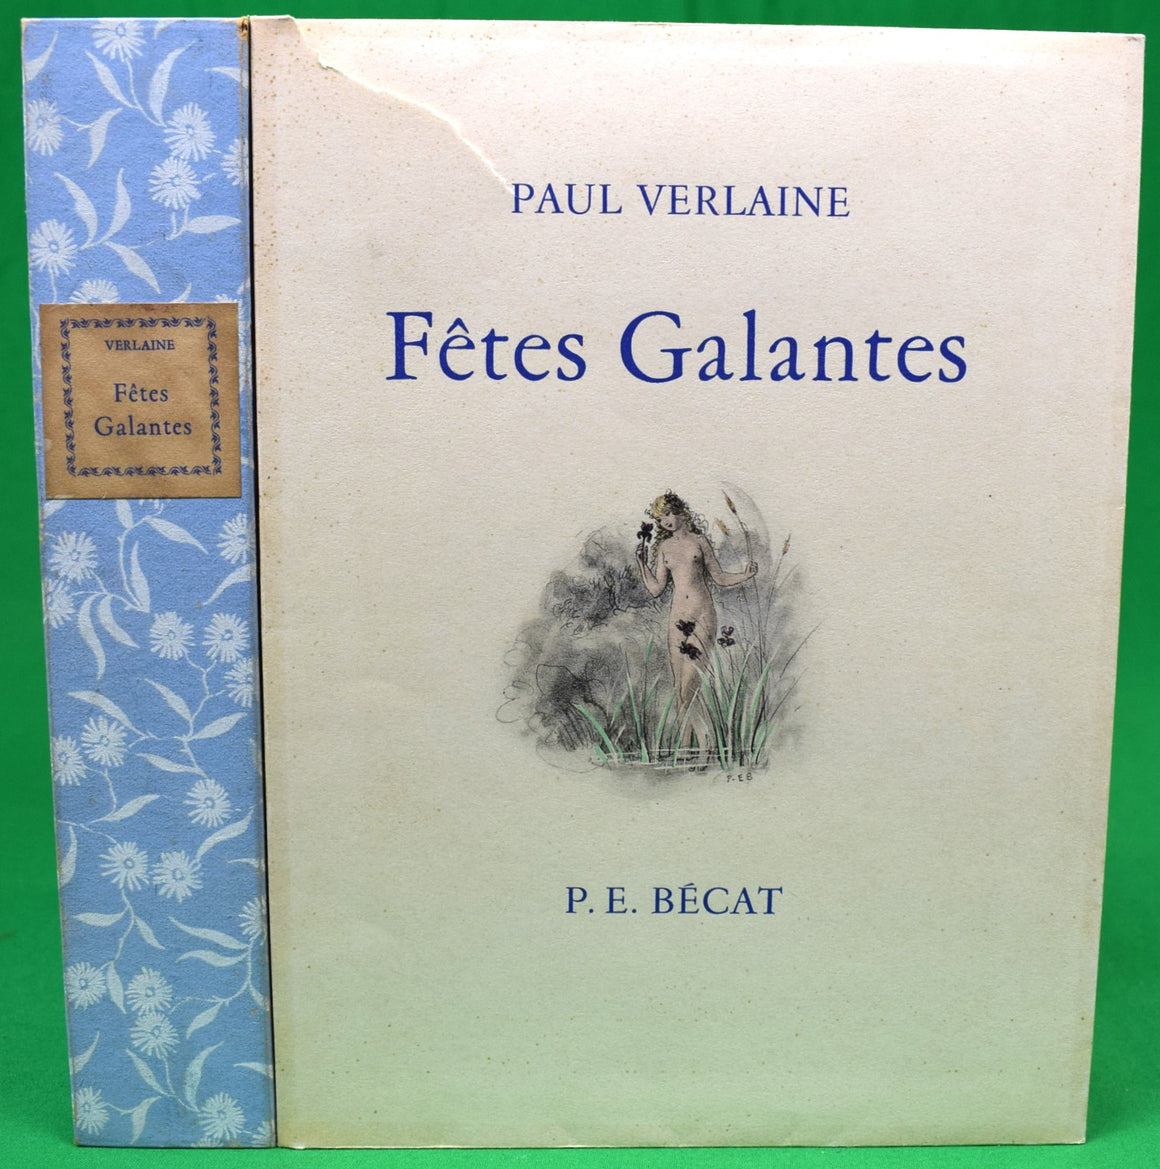 "Fetes Galantes" 1953 VERLAINE, Paul